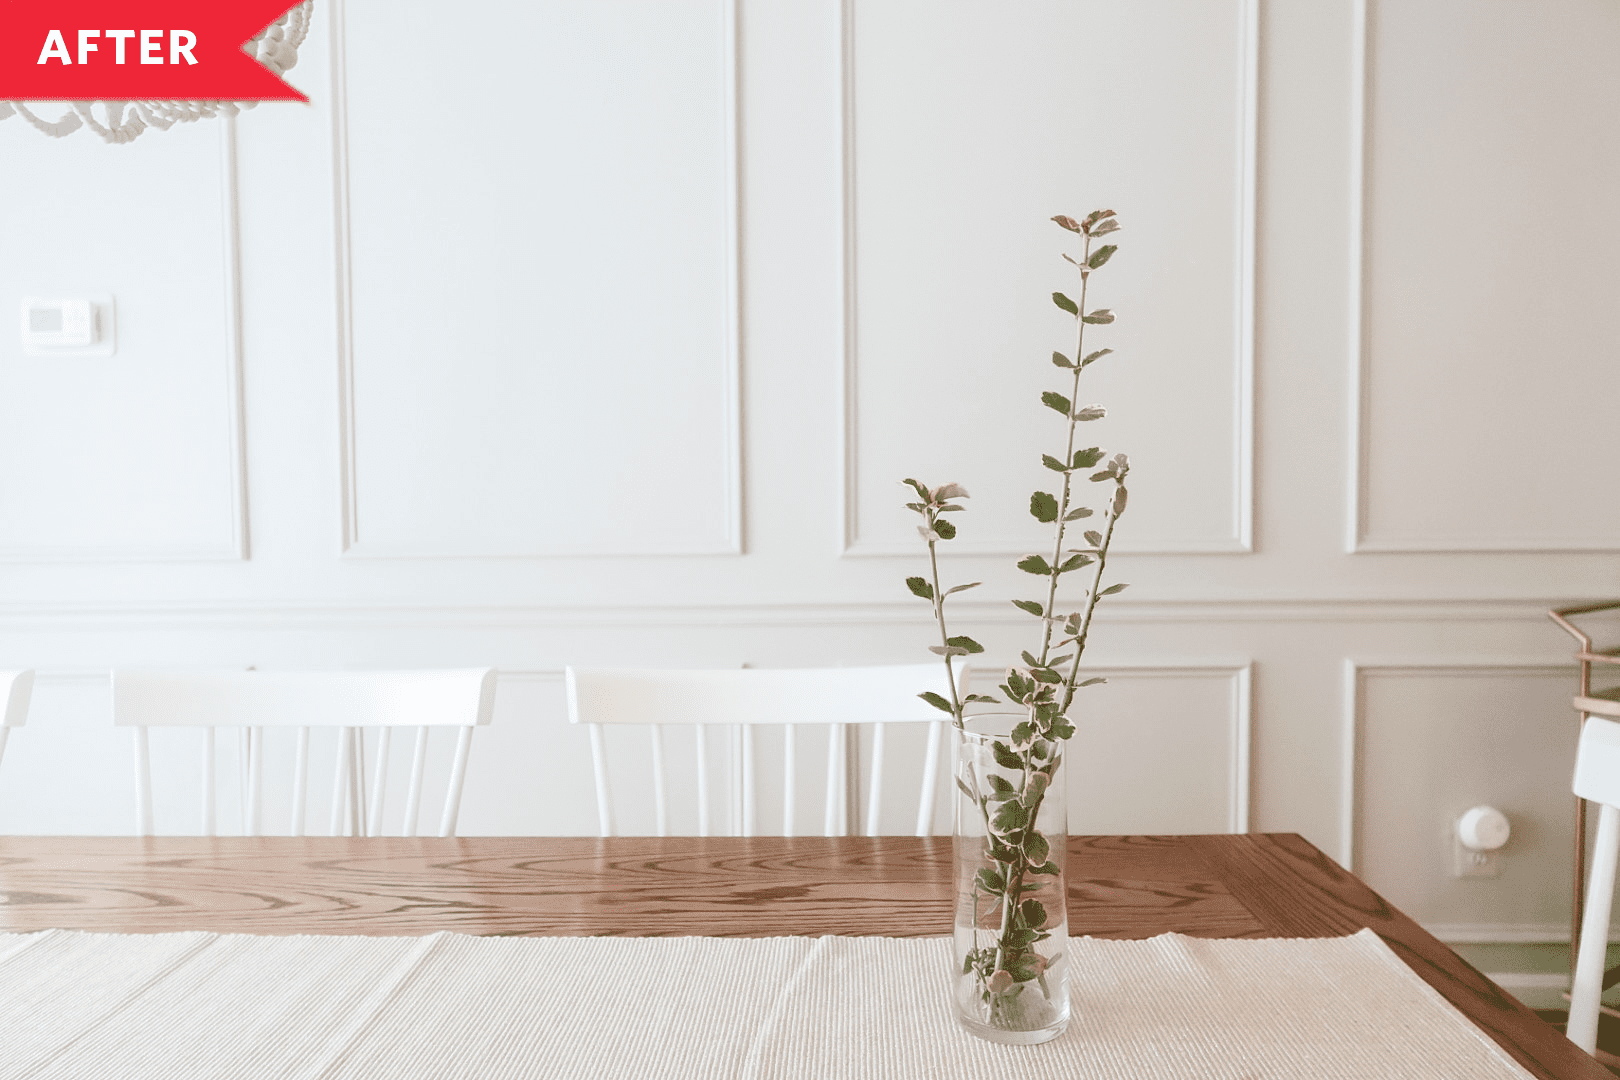 $250 DIY Picture Frame Moulding in Dining Room